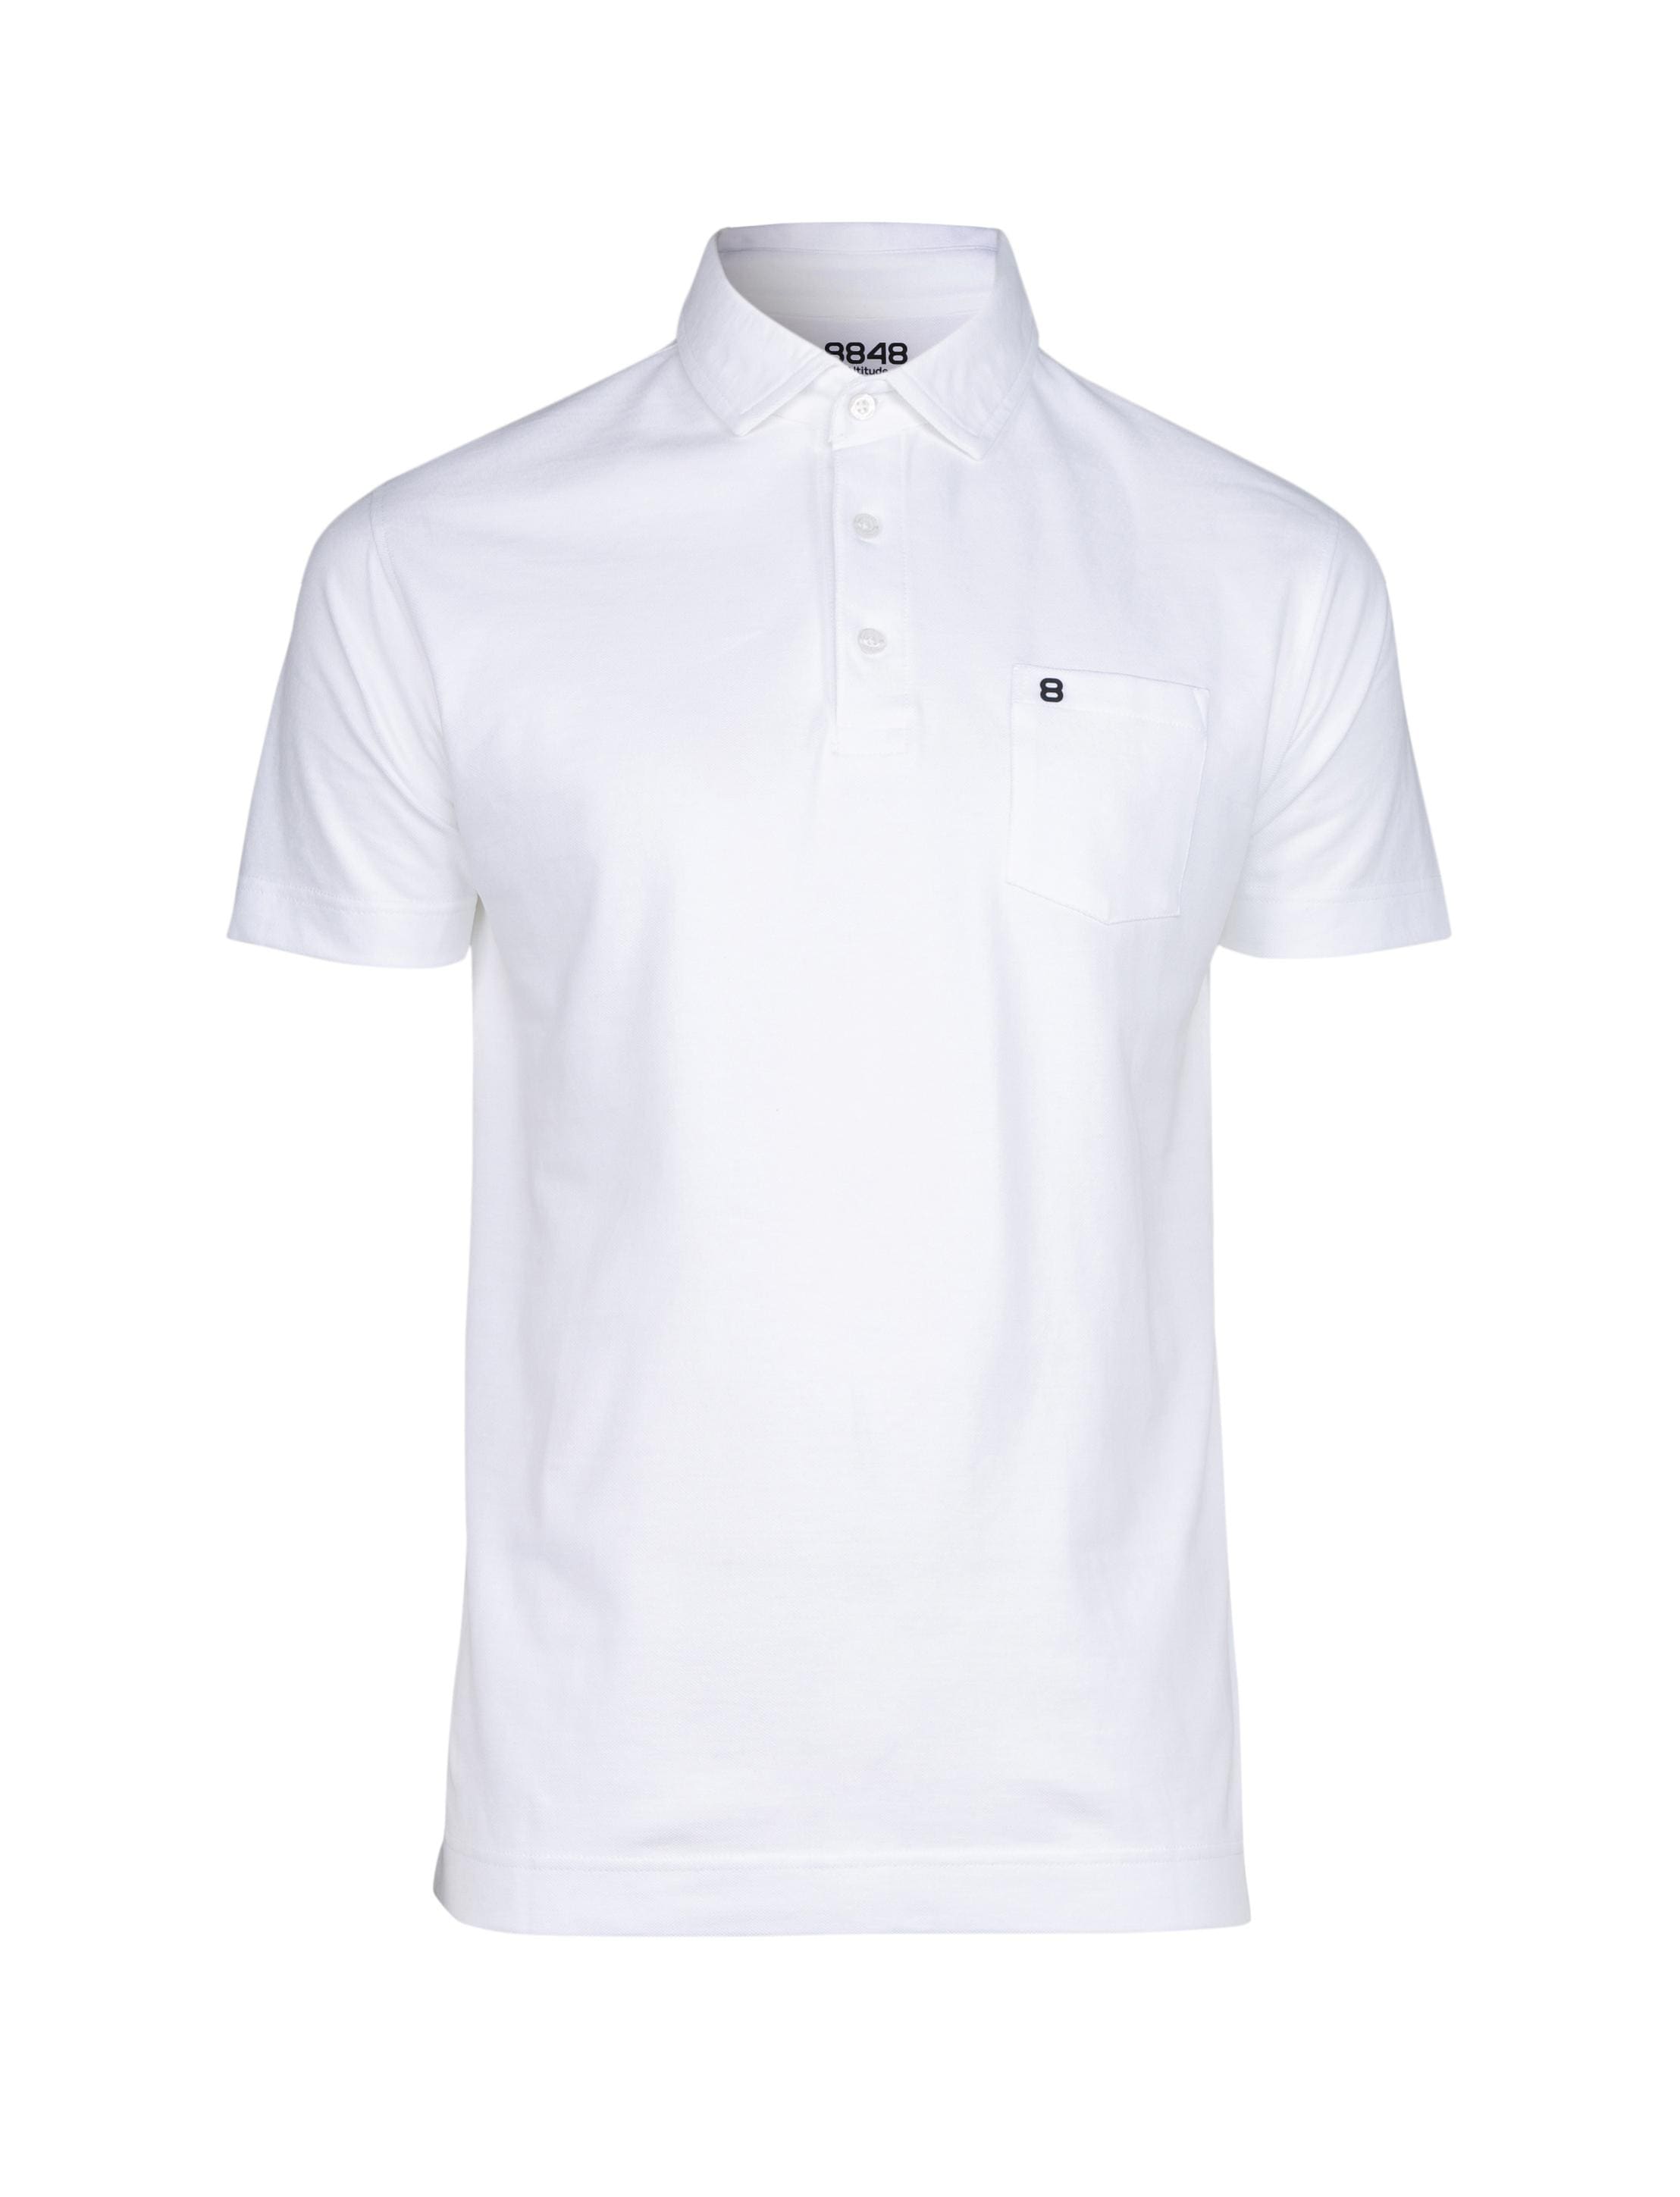 Tersus Polo Shirt White - White polo shirt men